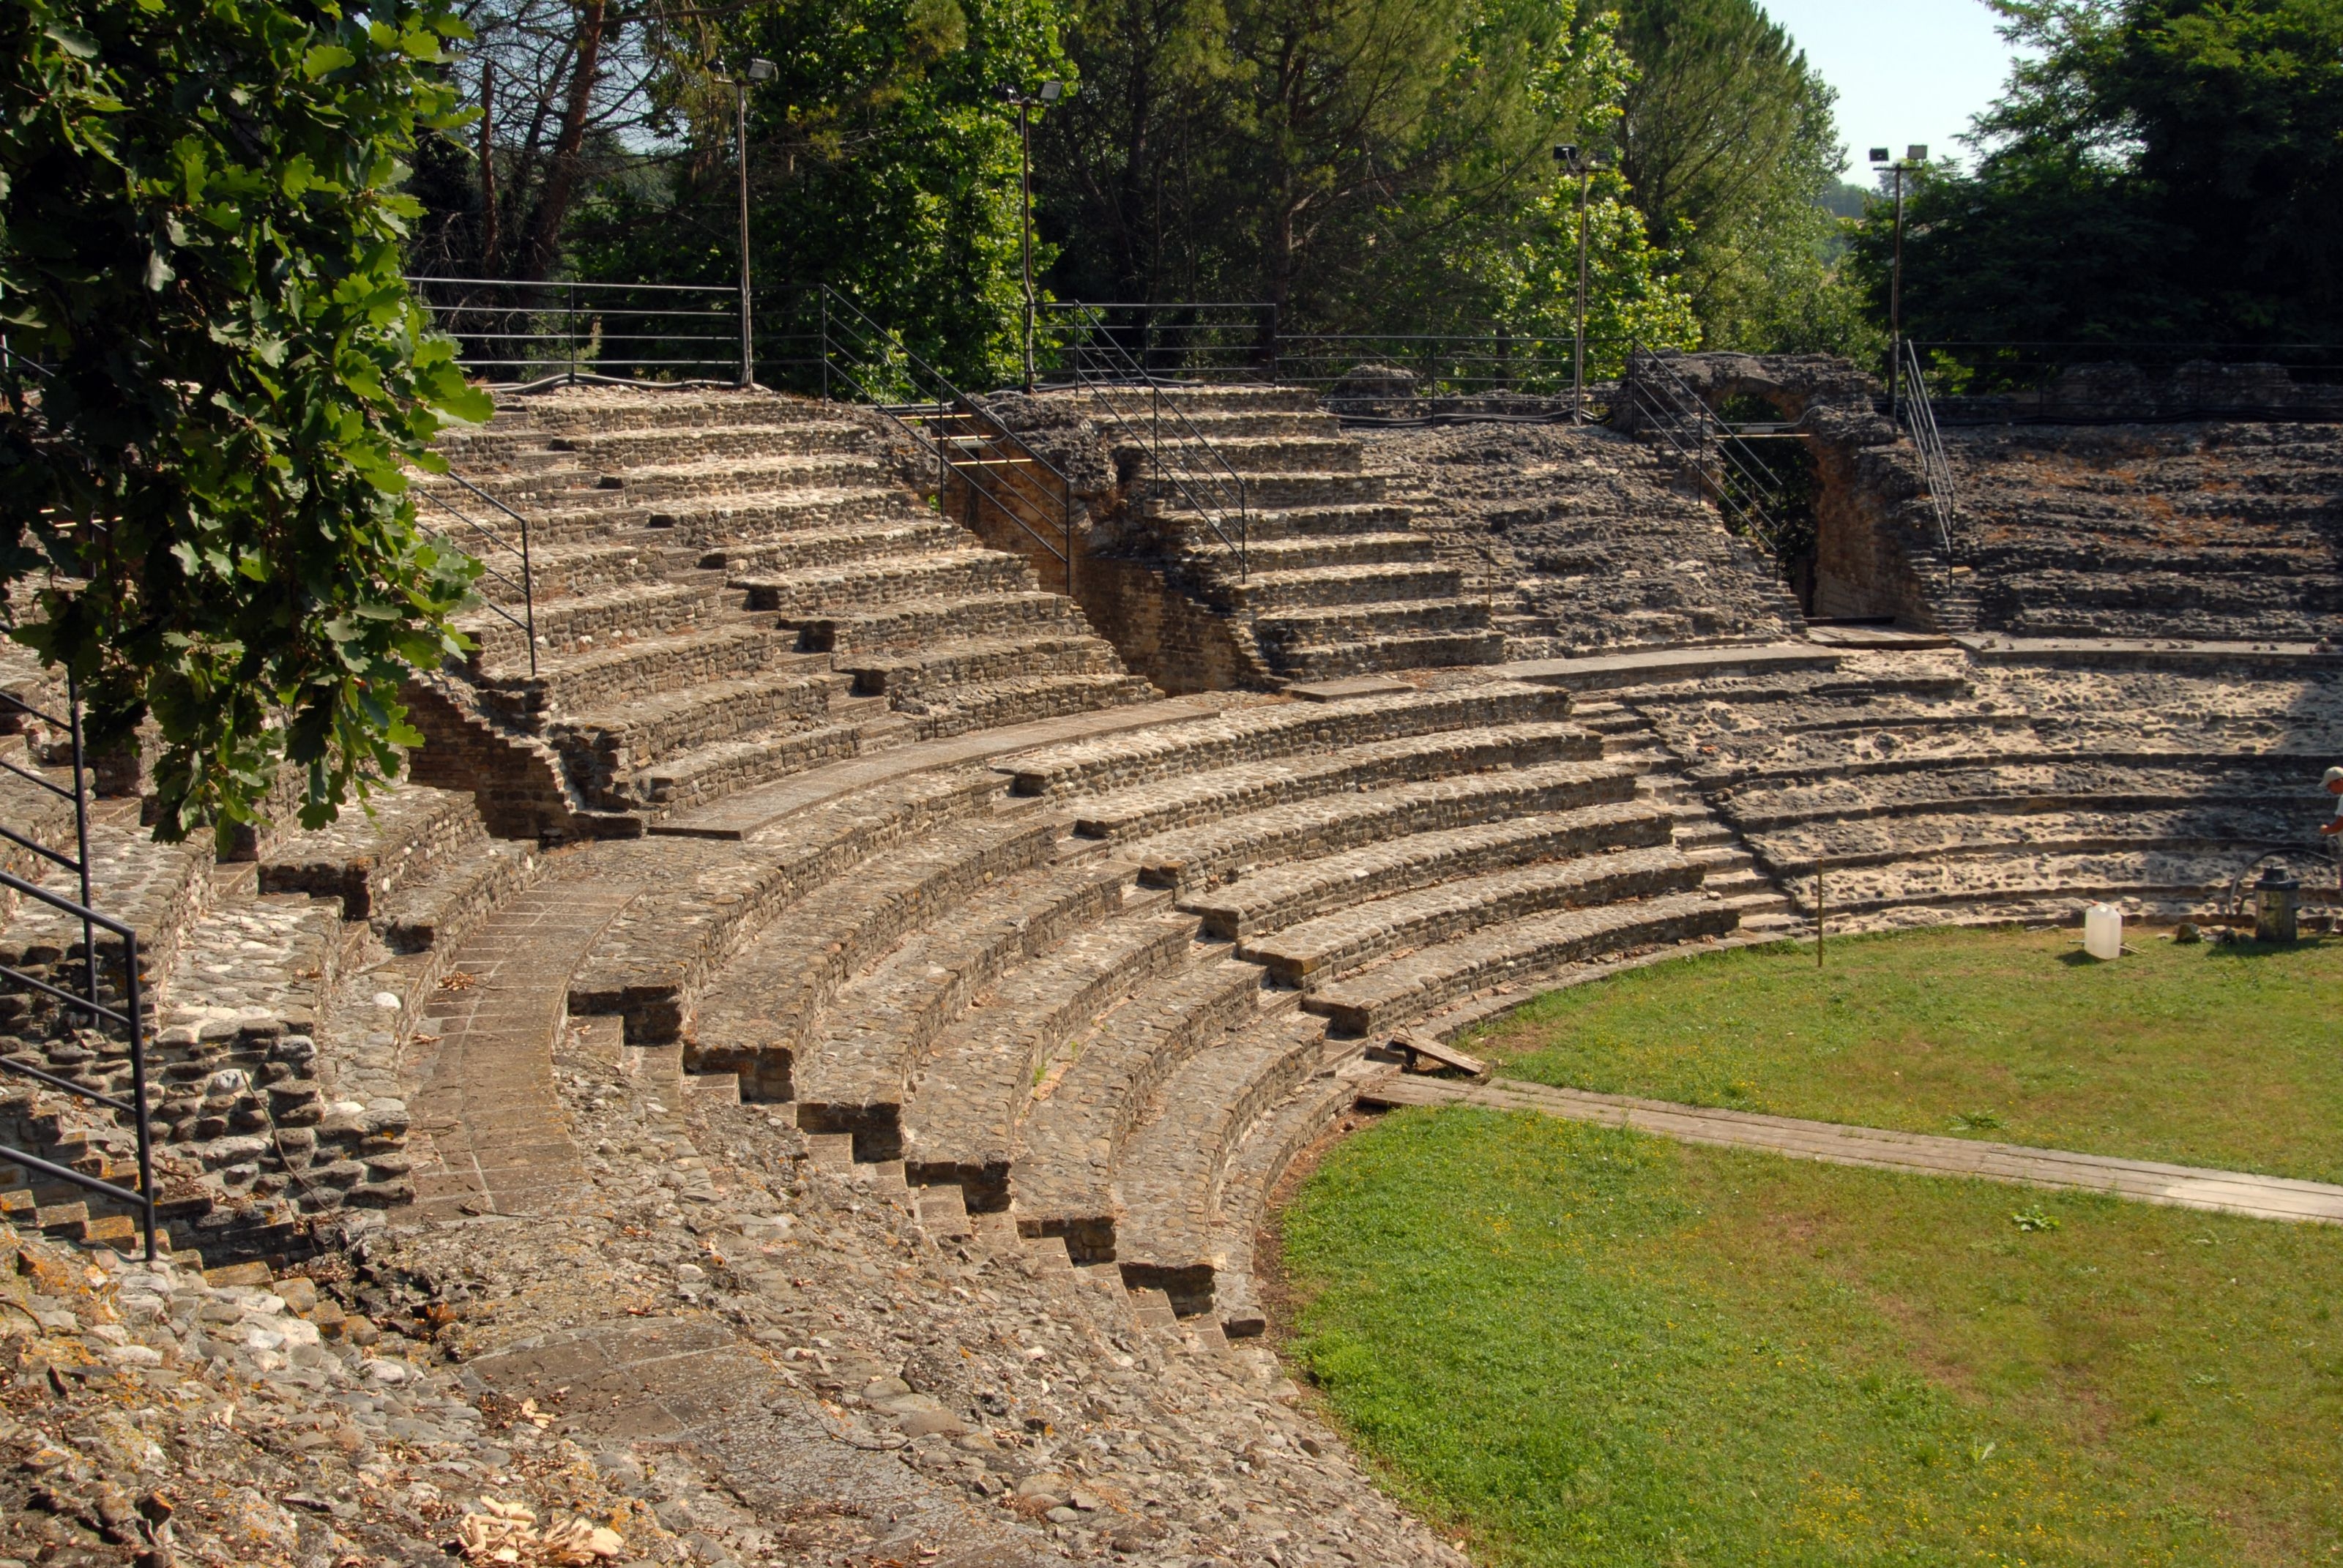 Parco Archeologico di Falerio Picenus